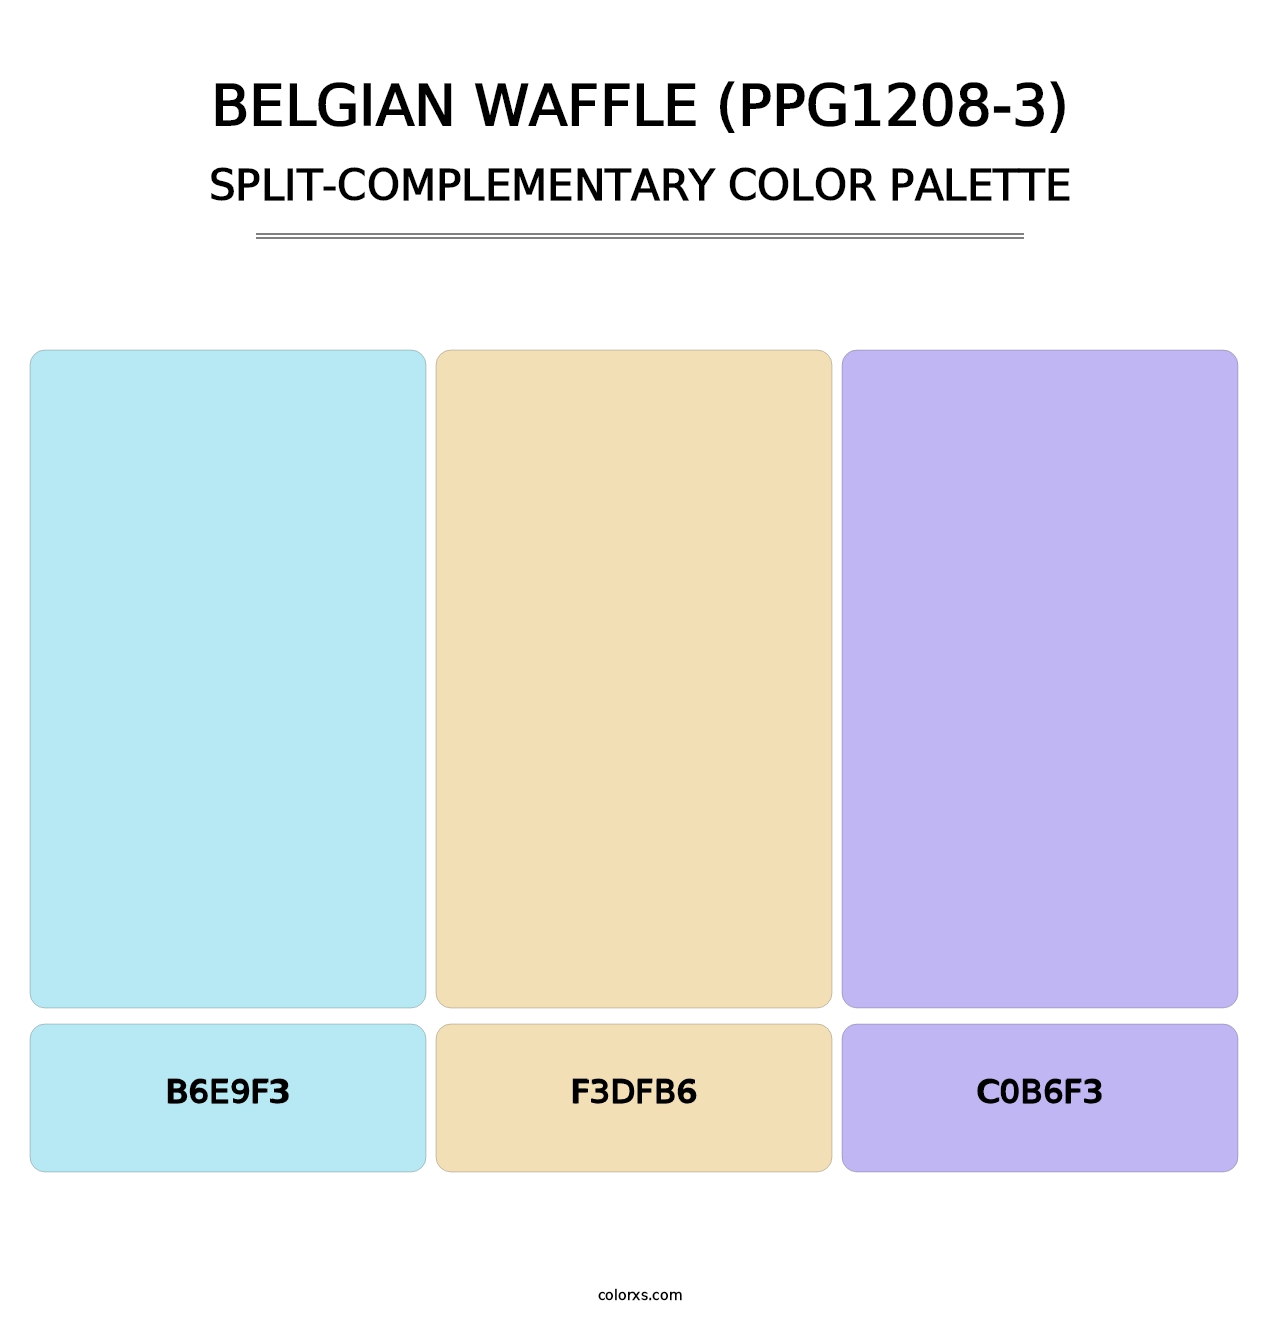 Belgian Waffle (PPG1208-3) - Split-Complementary Color Palette